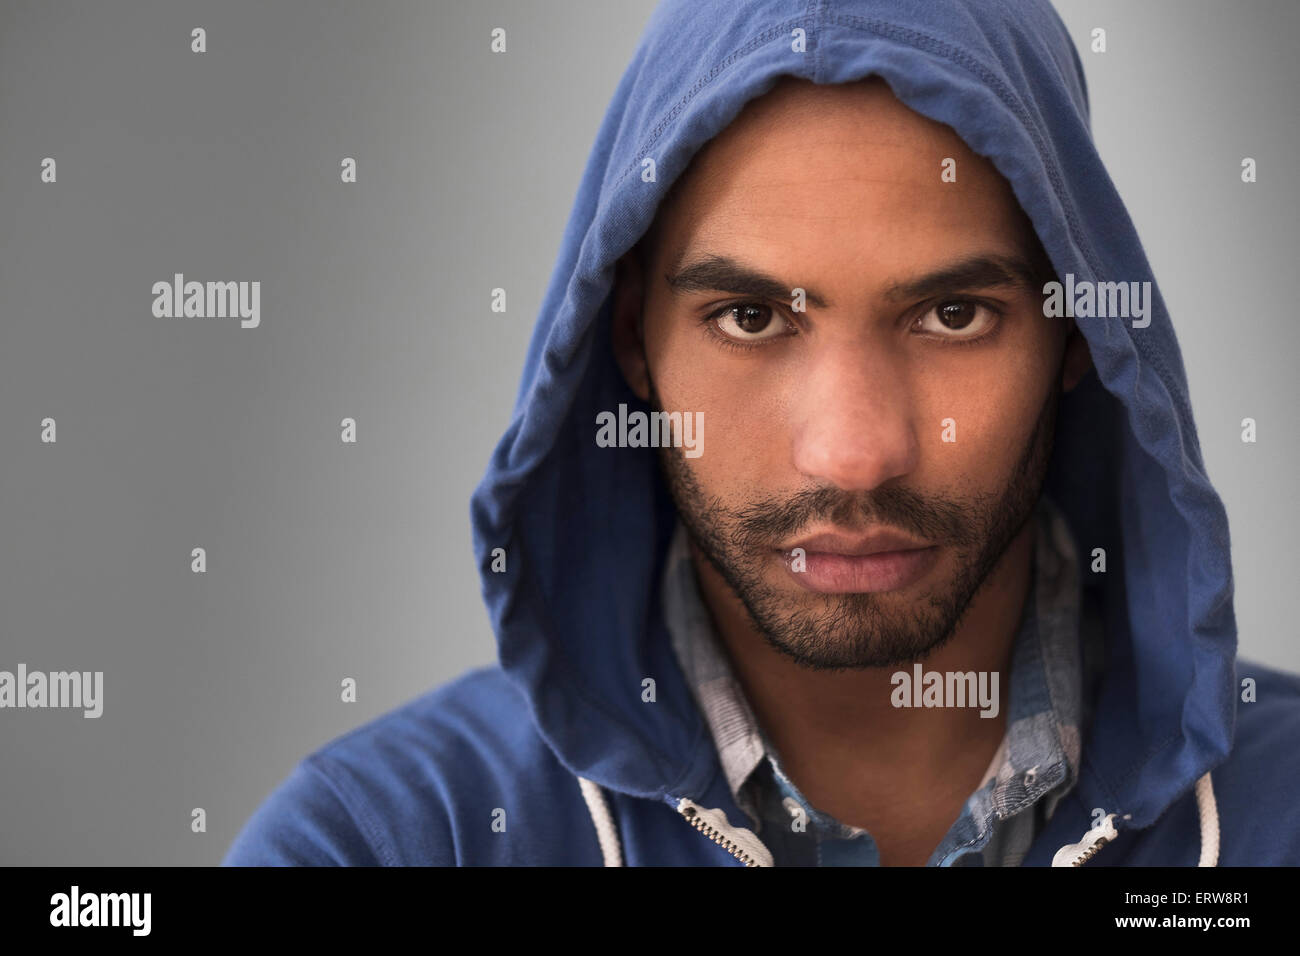 Serious Hispanic man wearing hoodie Stock Photo - Alamy